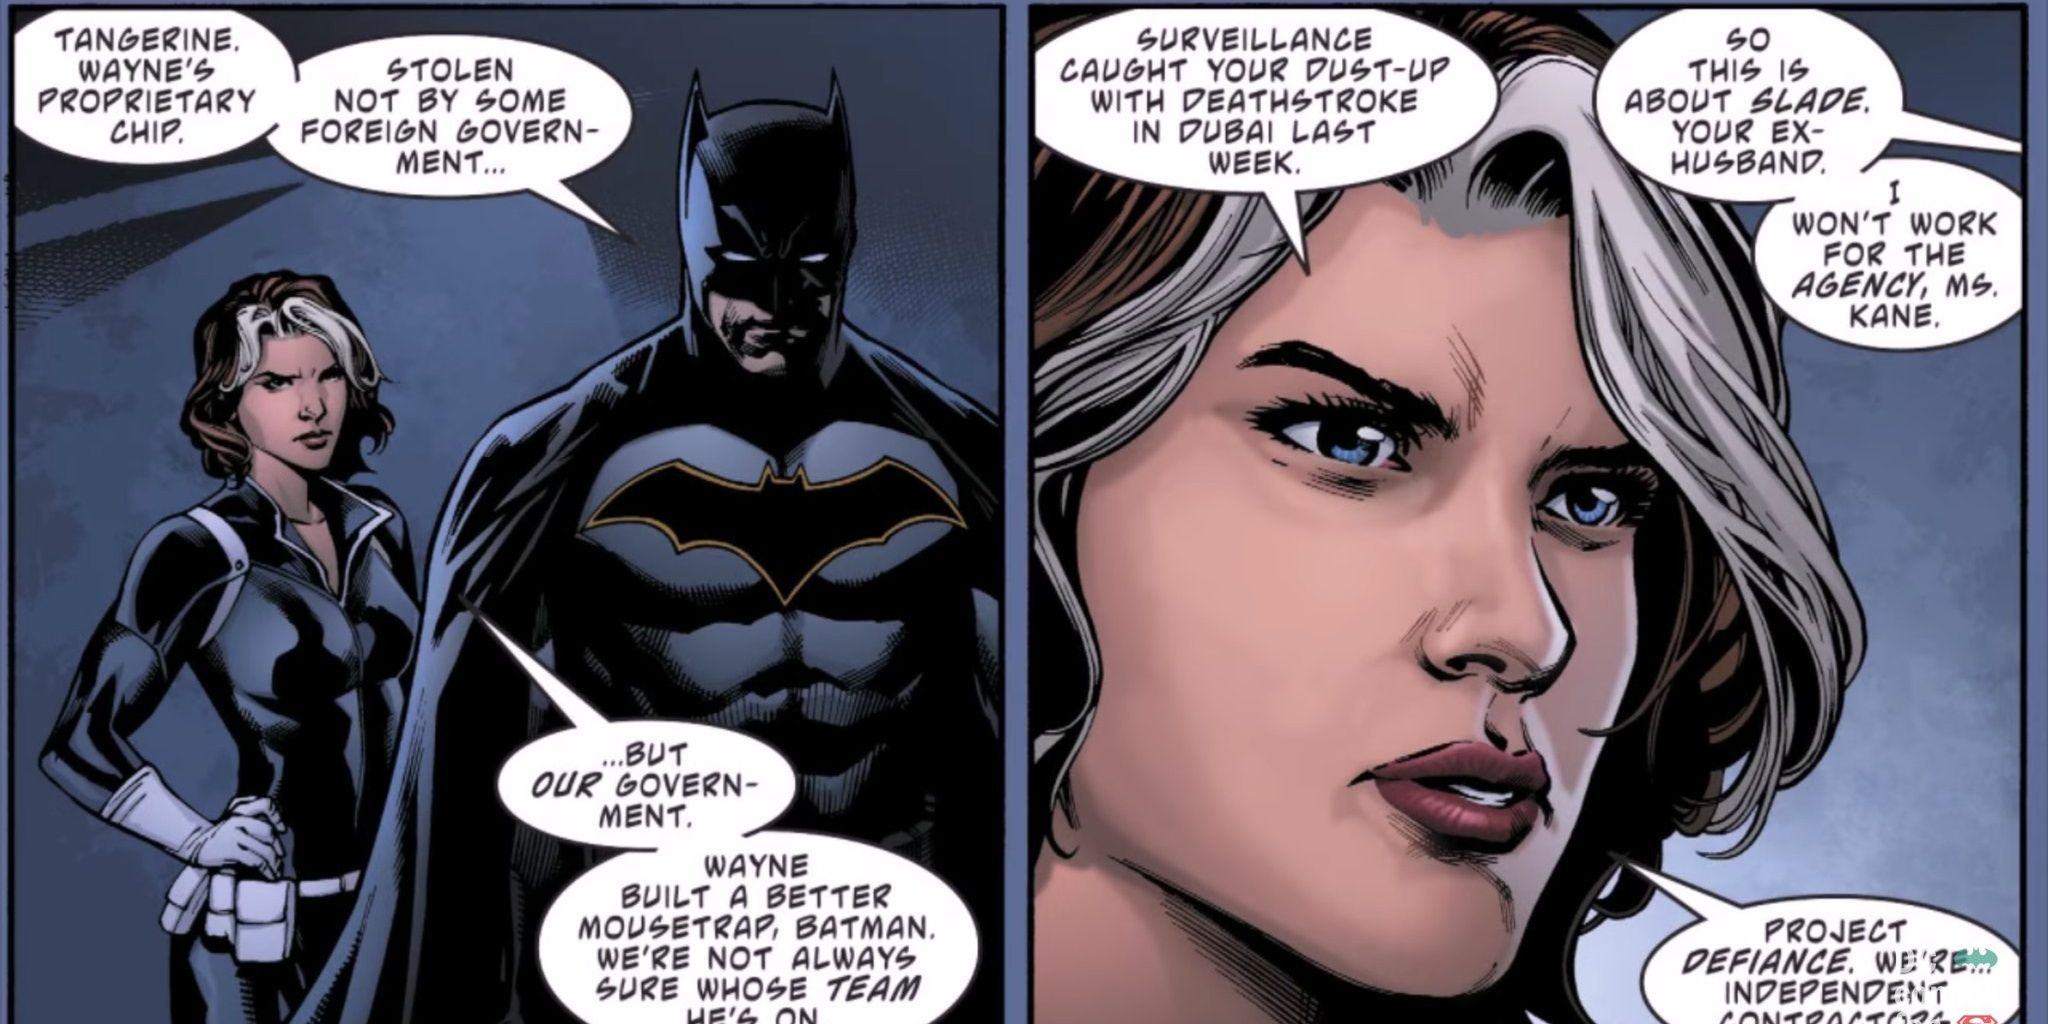 Adeline Kane discusses strategies with Batman in DC comics